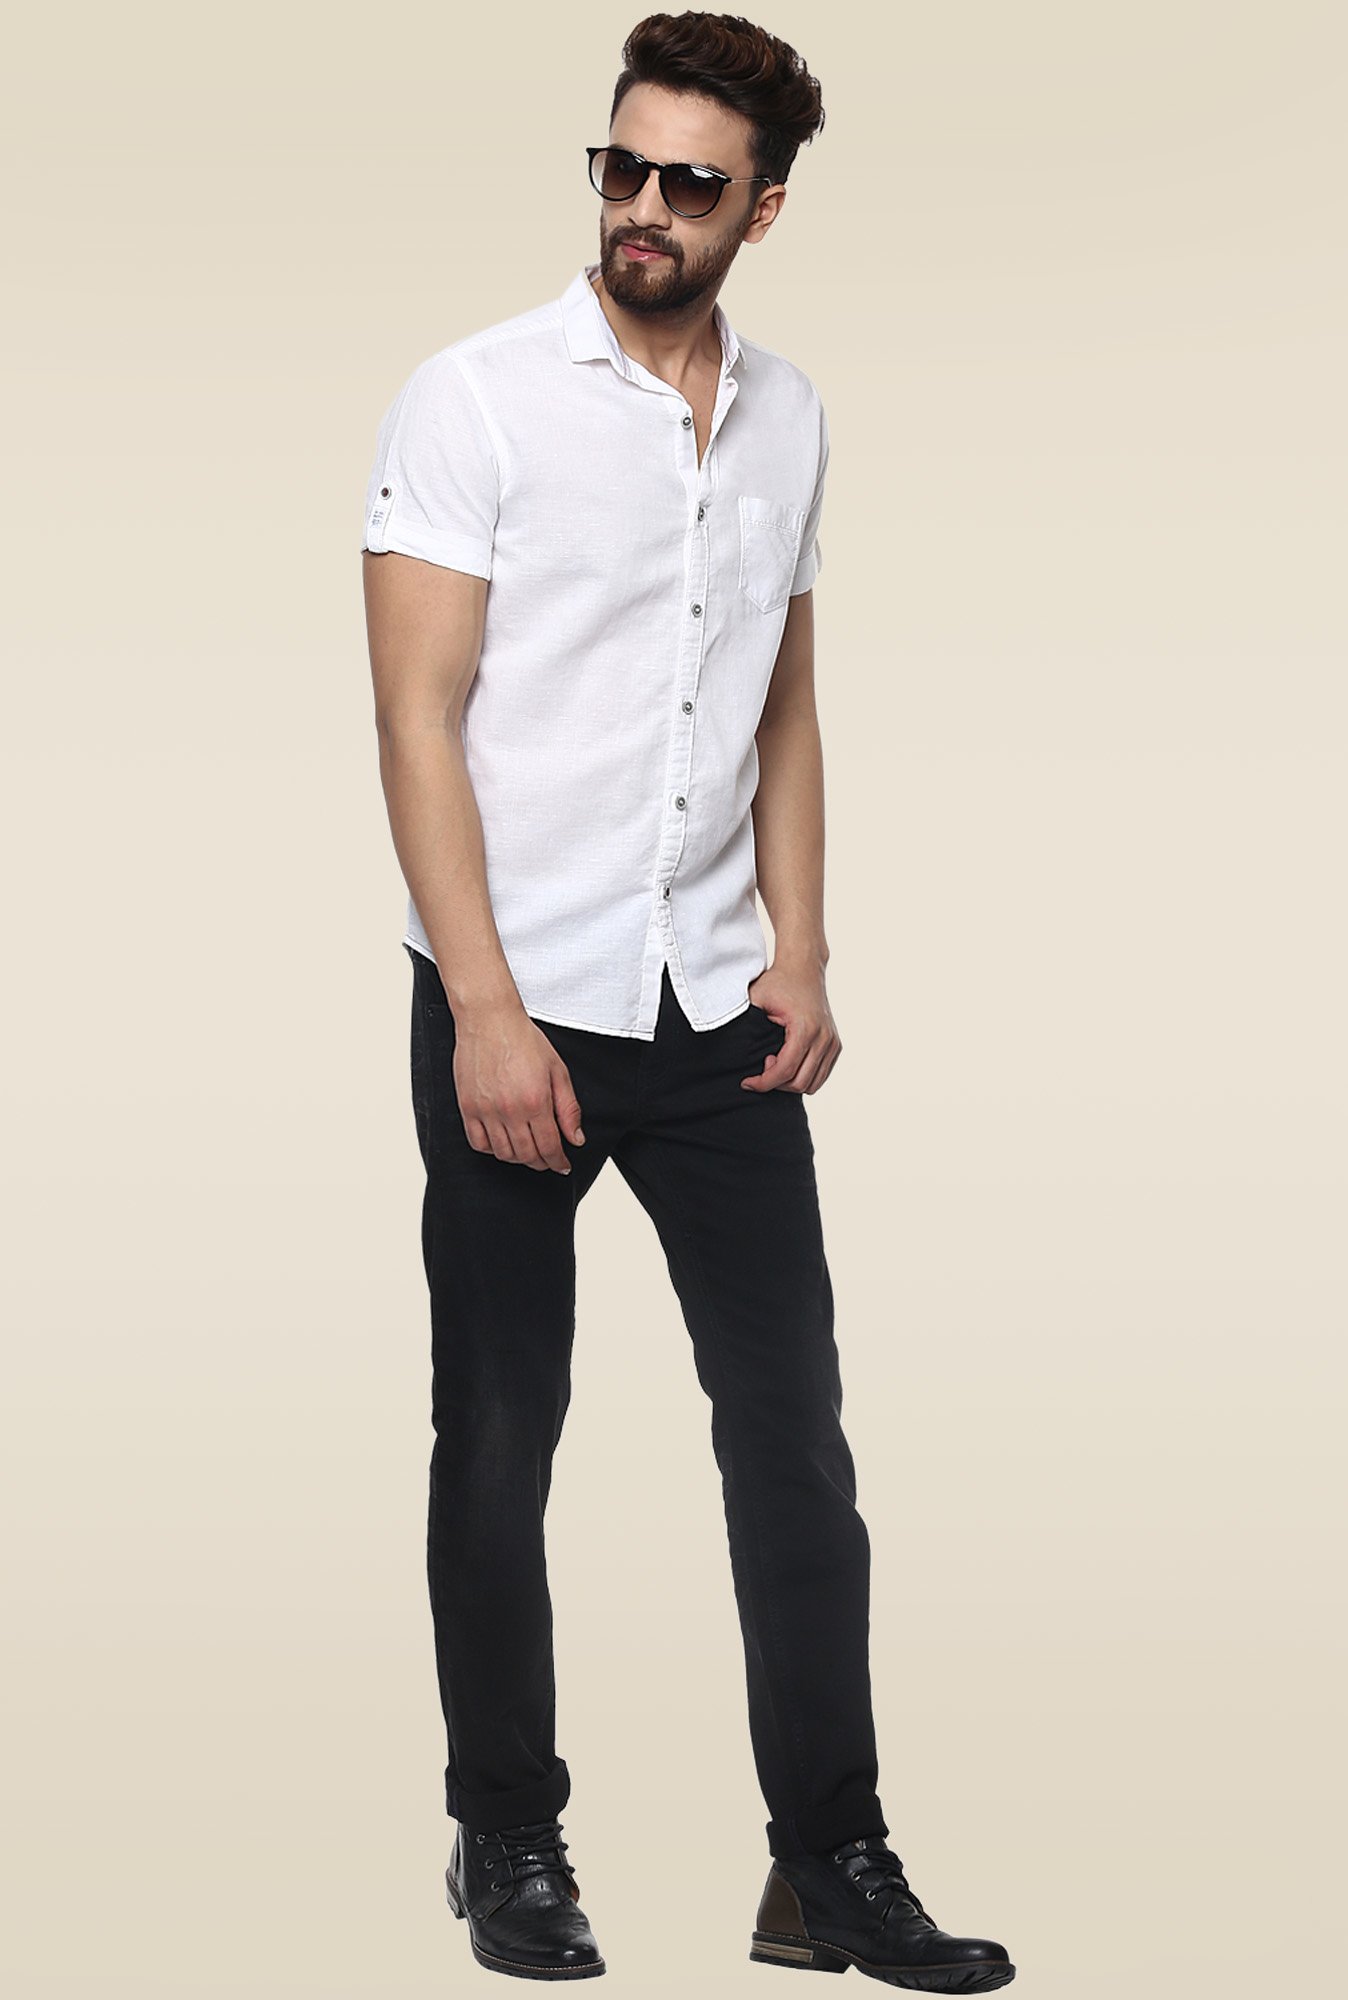 white half sleeve casual shirt